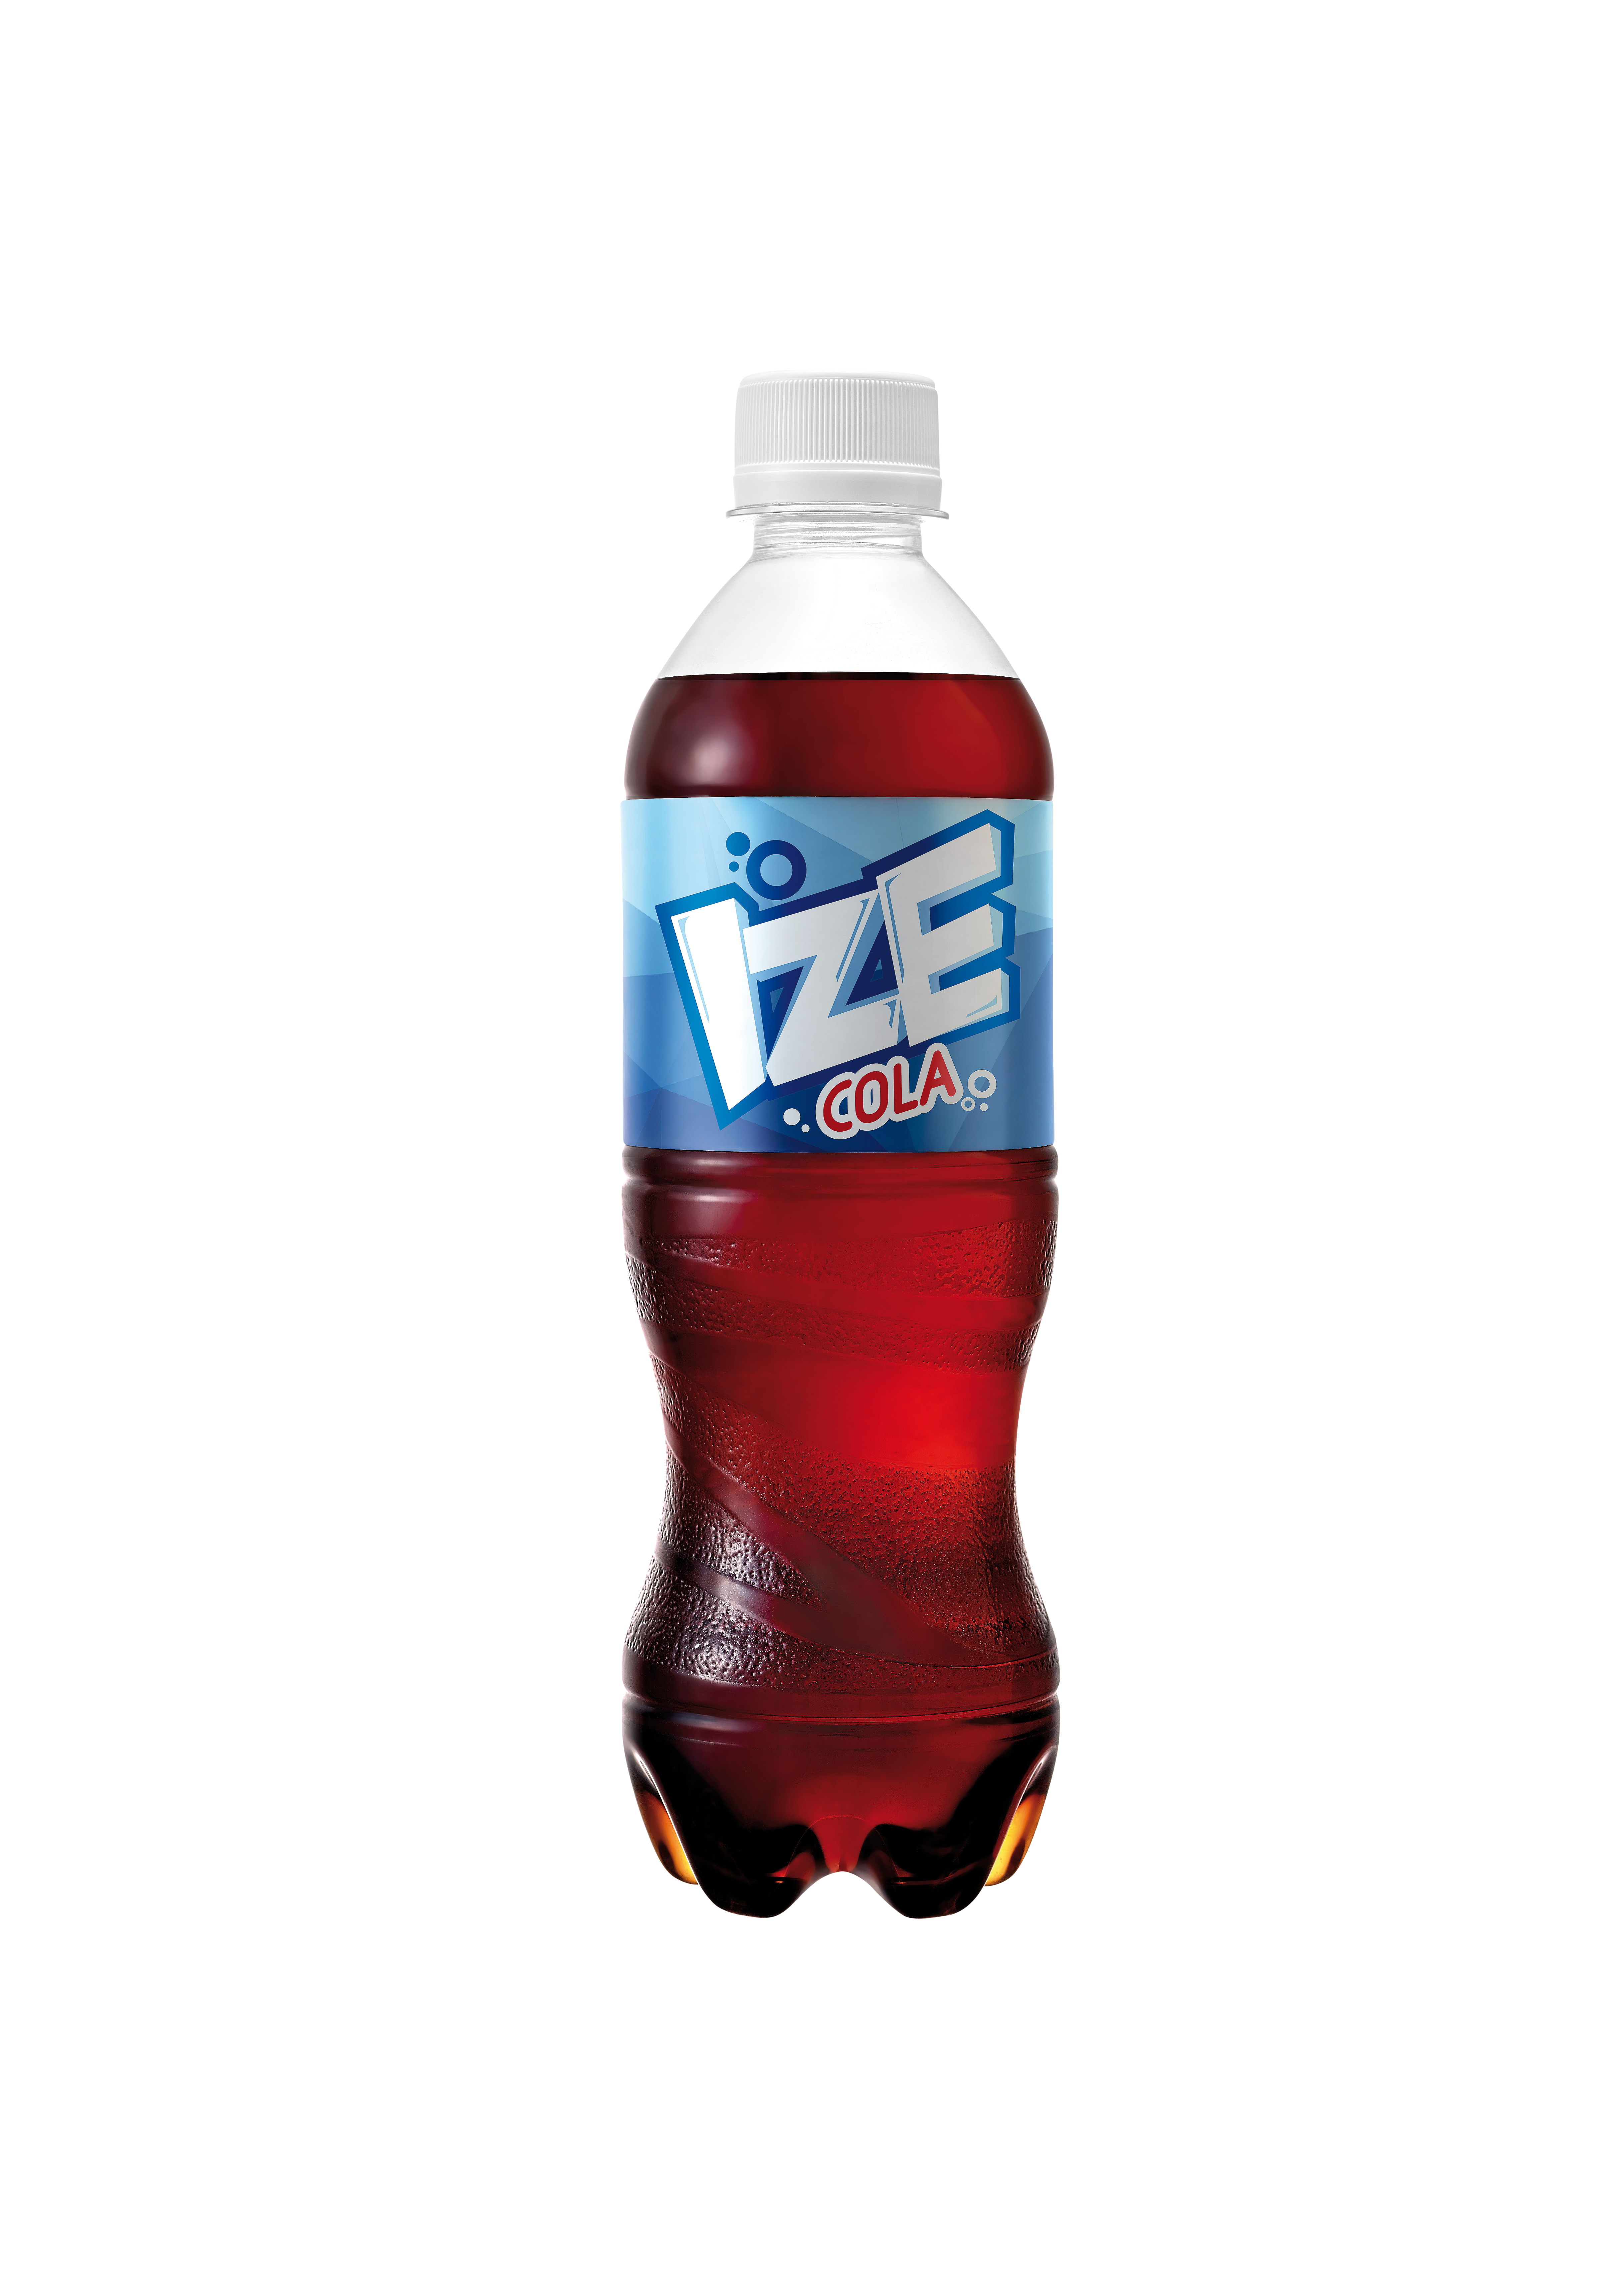 IZE Cola_Bottle